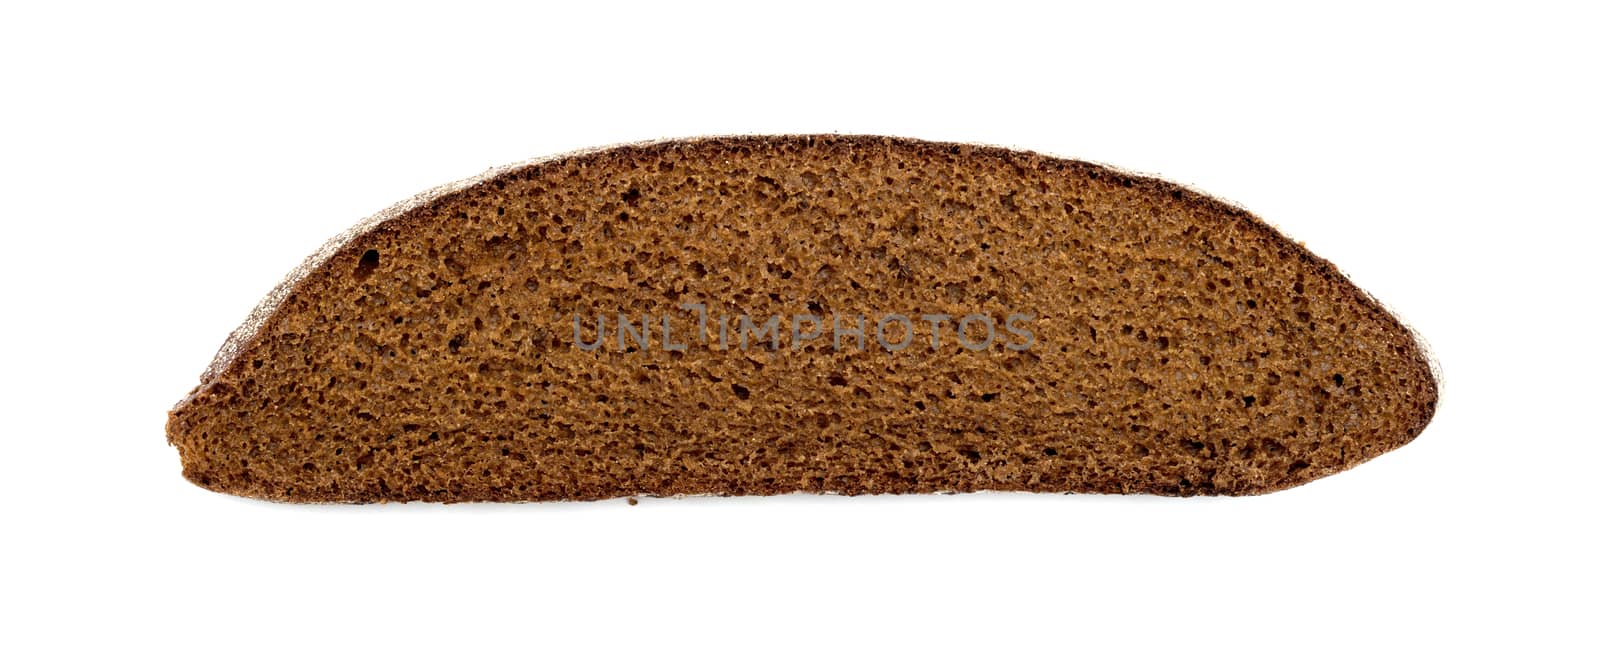 Rye bread slice isolated on white background